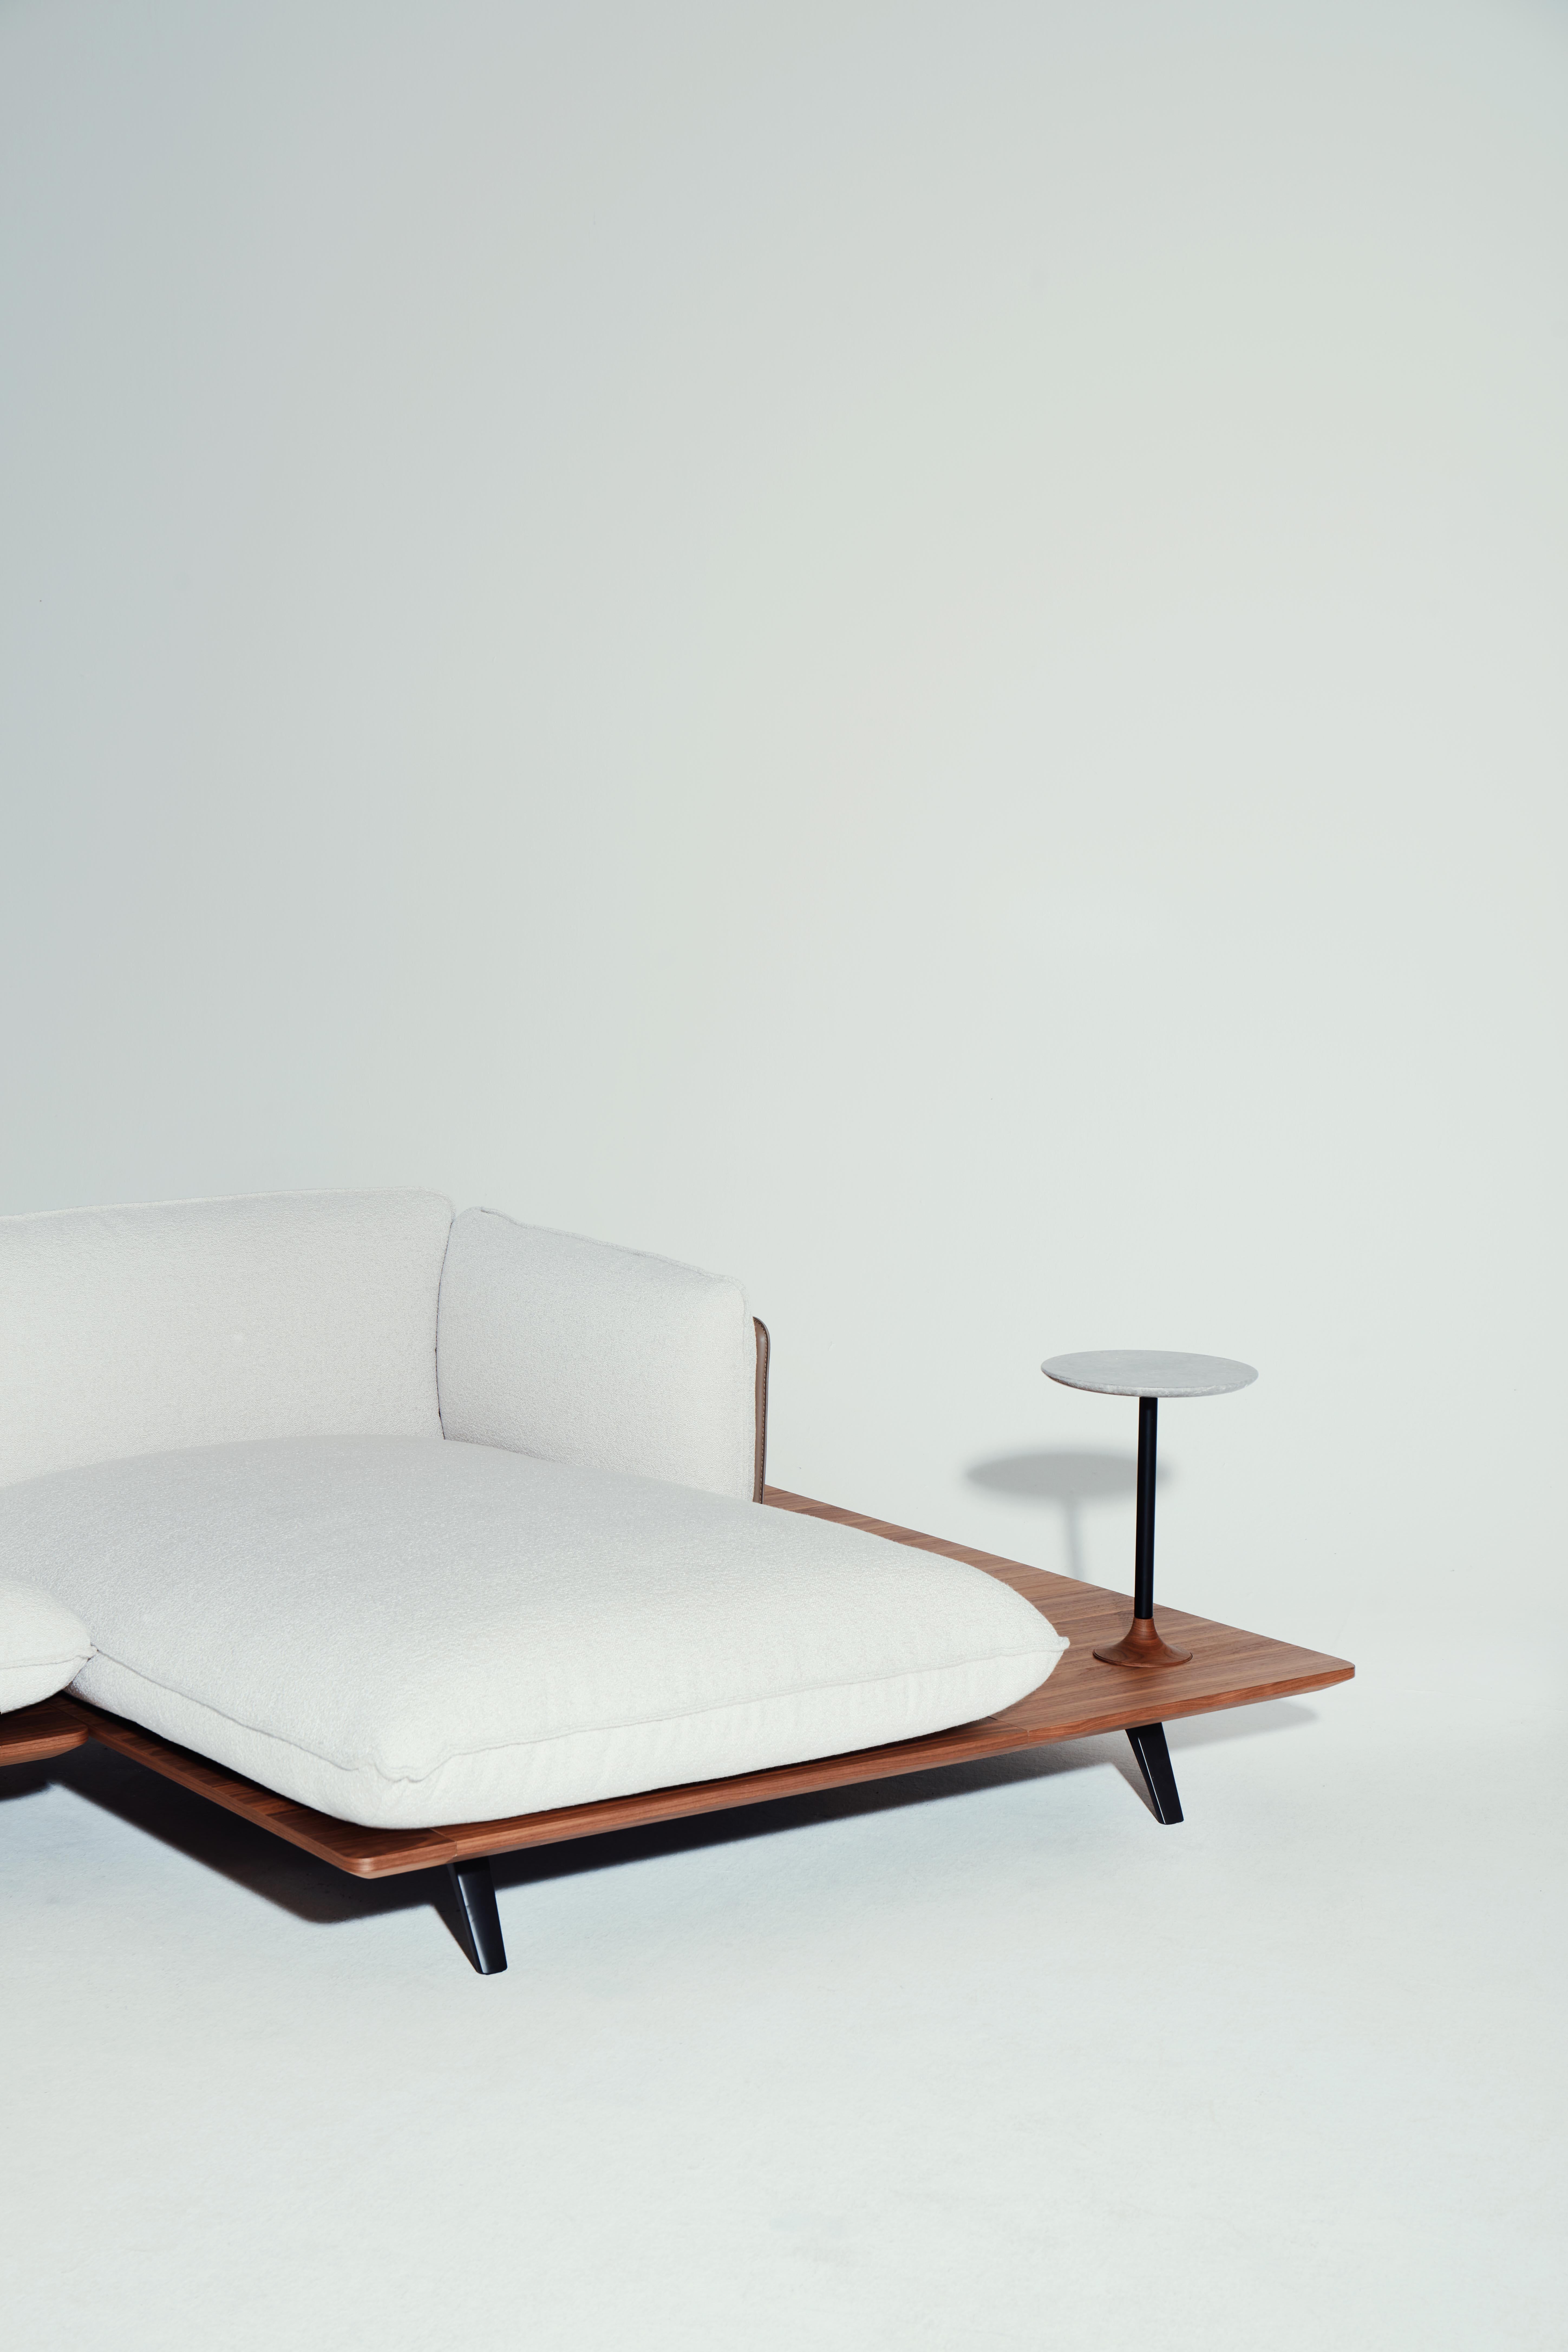 French Sahara Sofa by Noé Duchaufour Lawrance For Sale